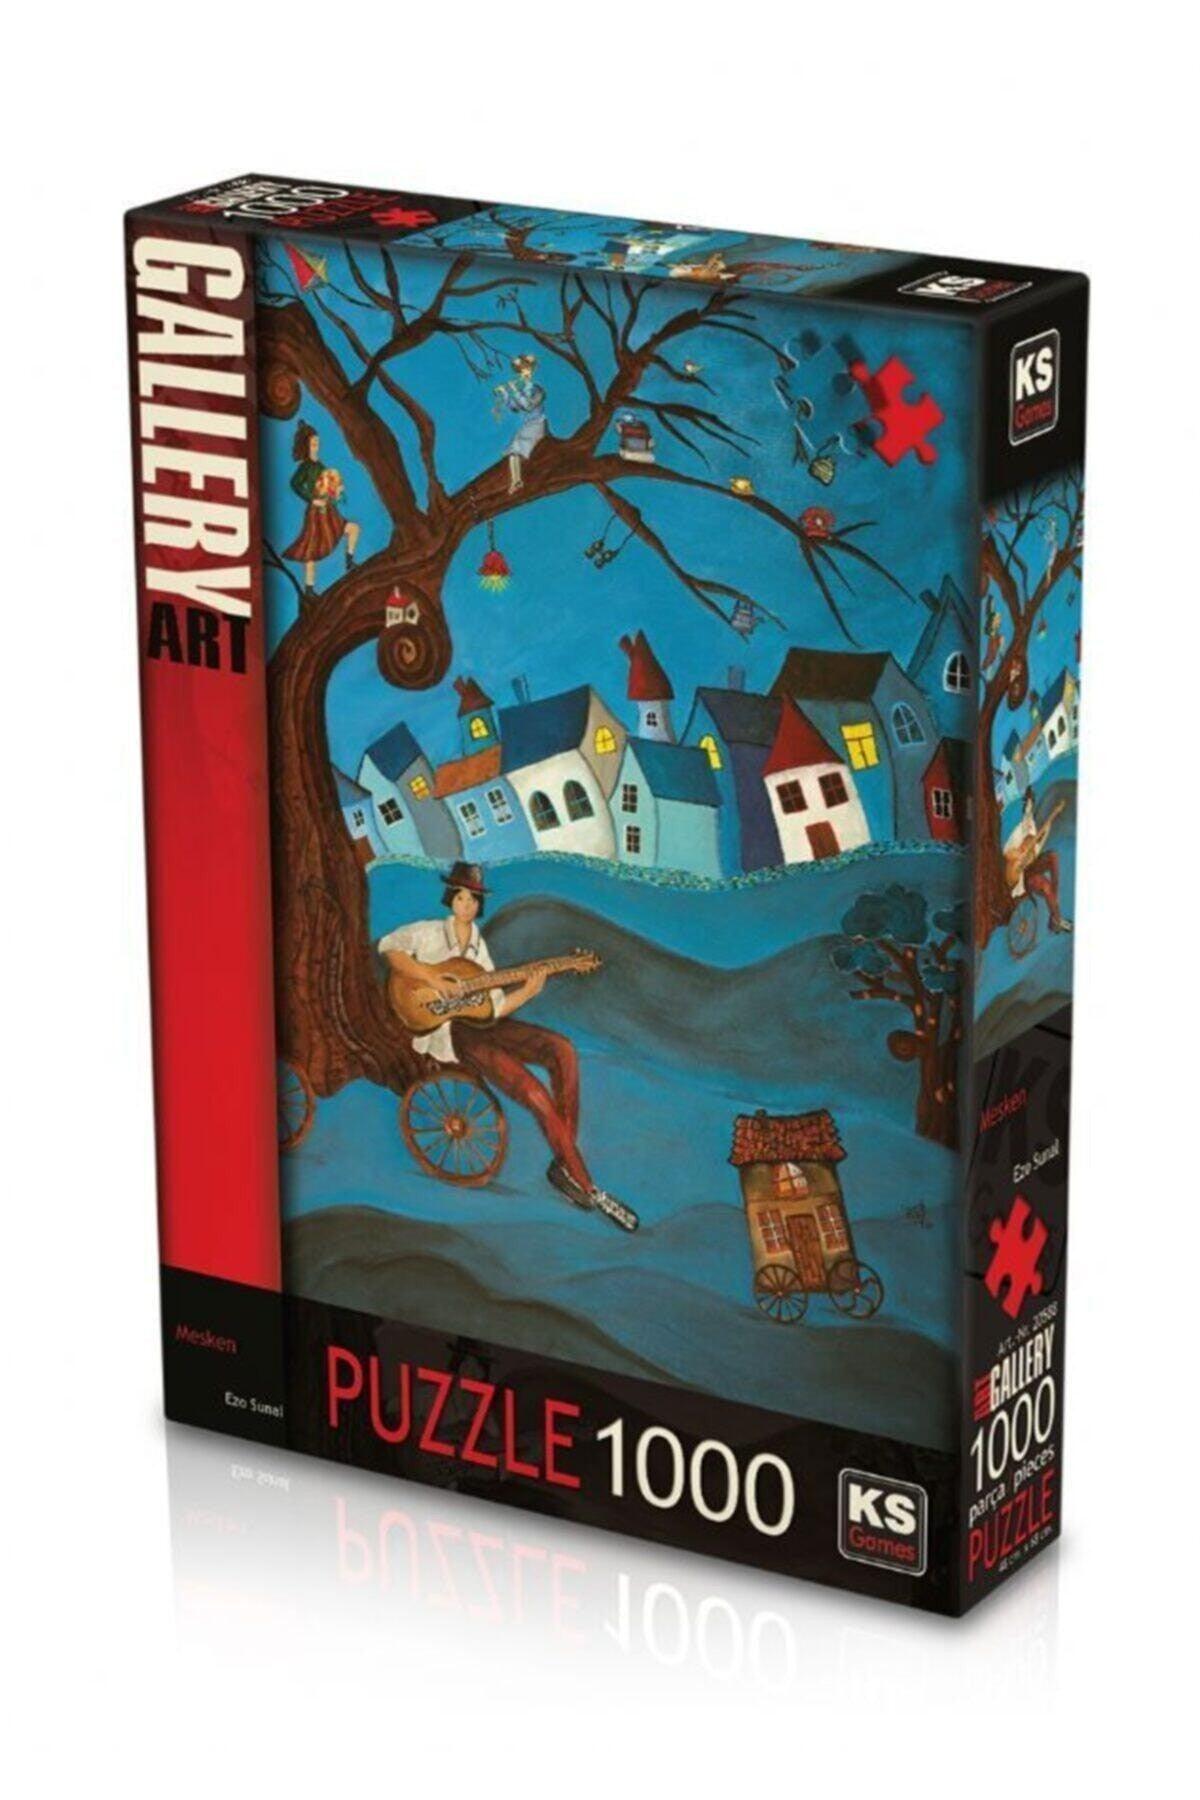 Ks Residence 1000 Piece Puzzle - Swordslife